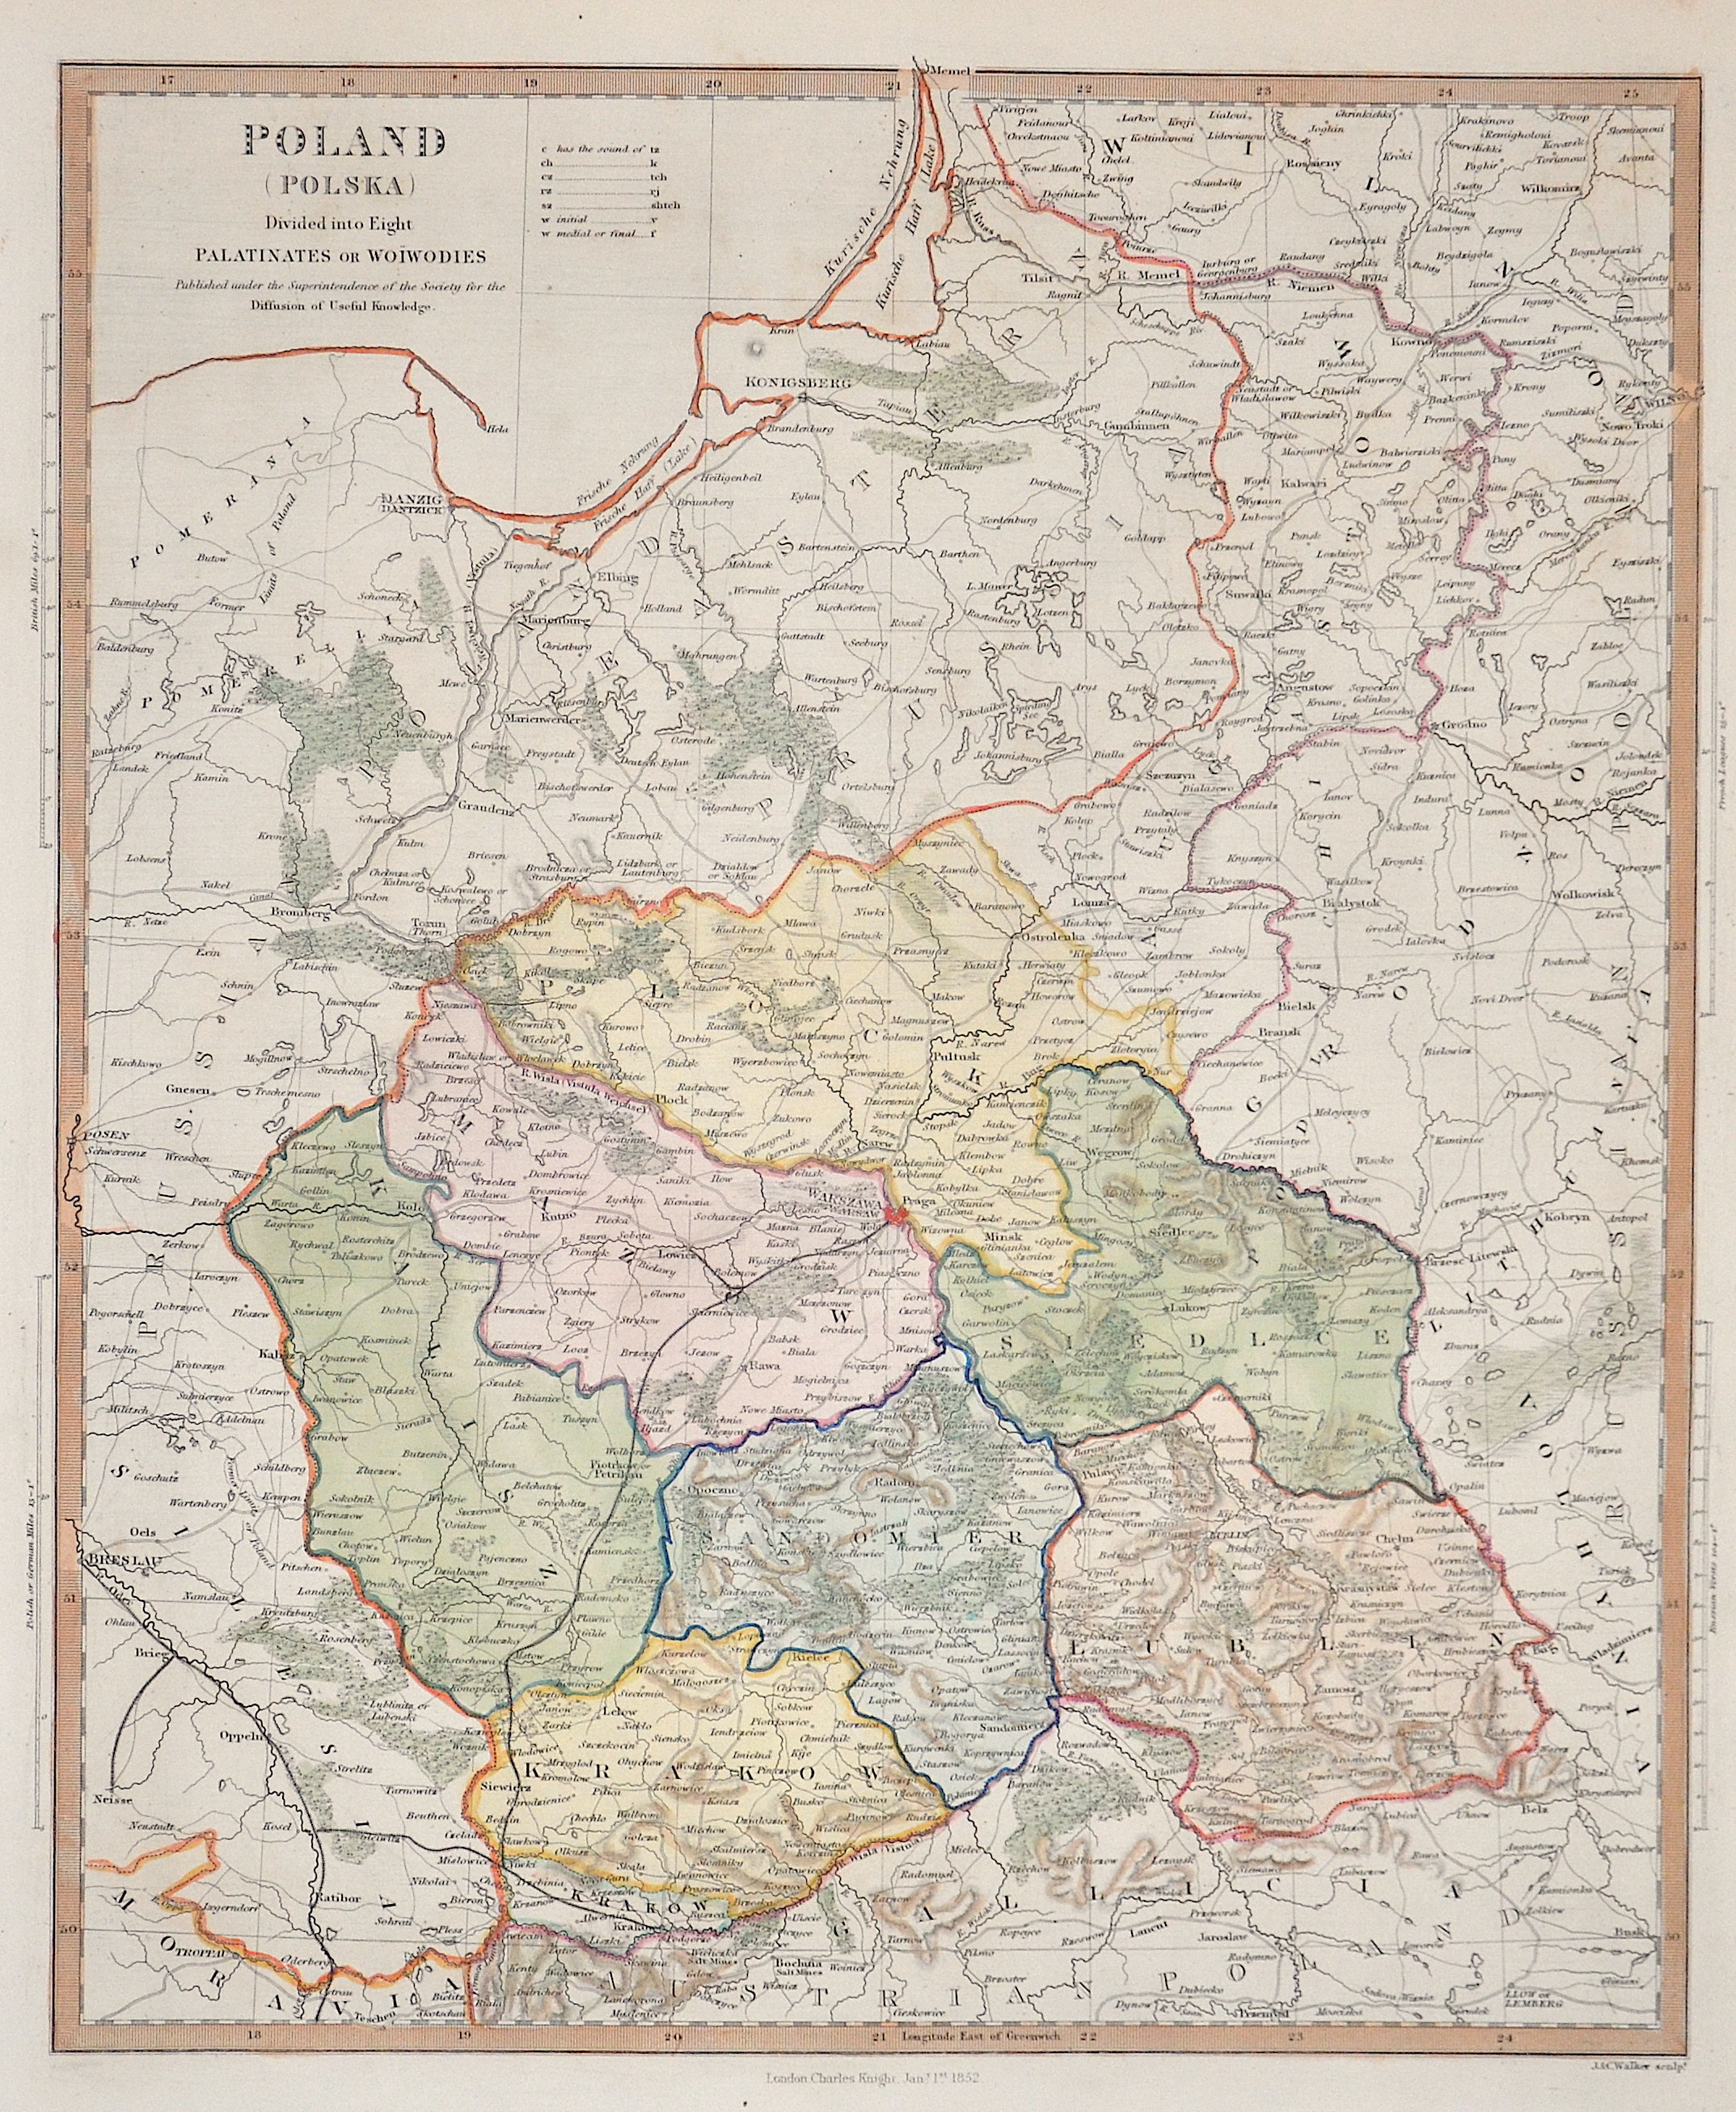 Walker  Poland (Polska) Divided into Eight Palatinates or Woiwodies